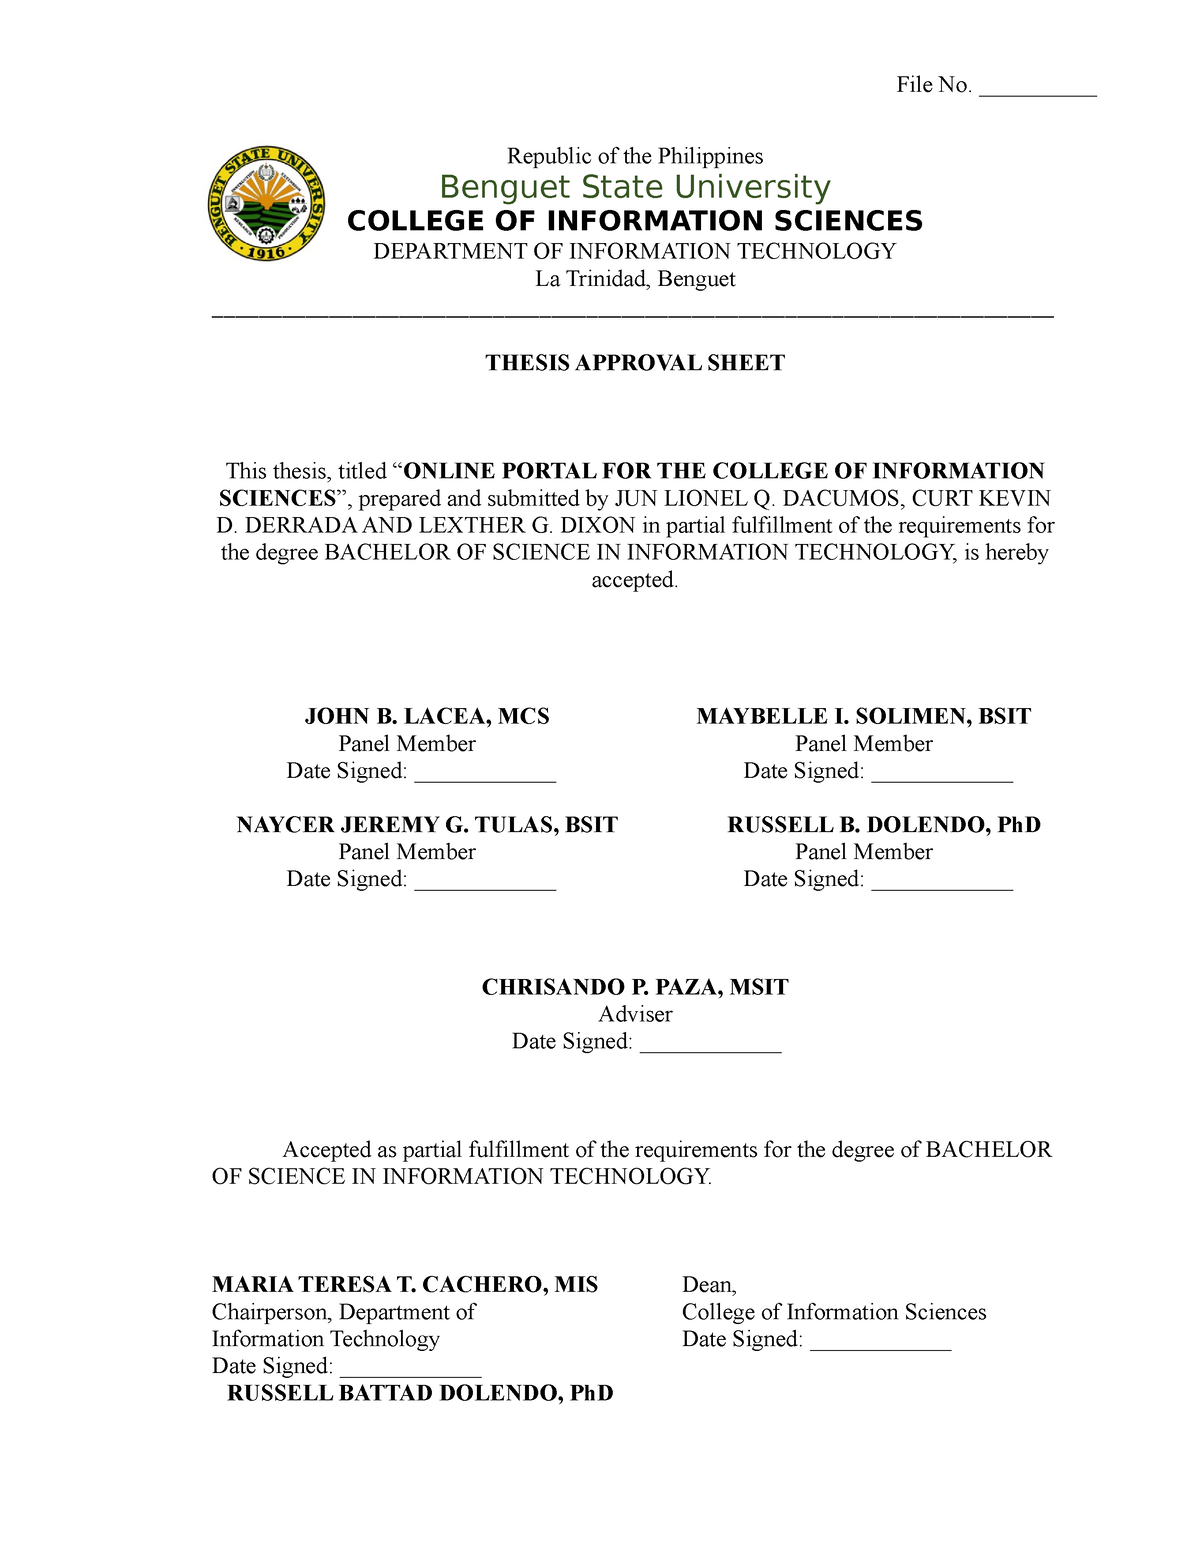 benguet state university thesis format